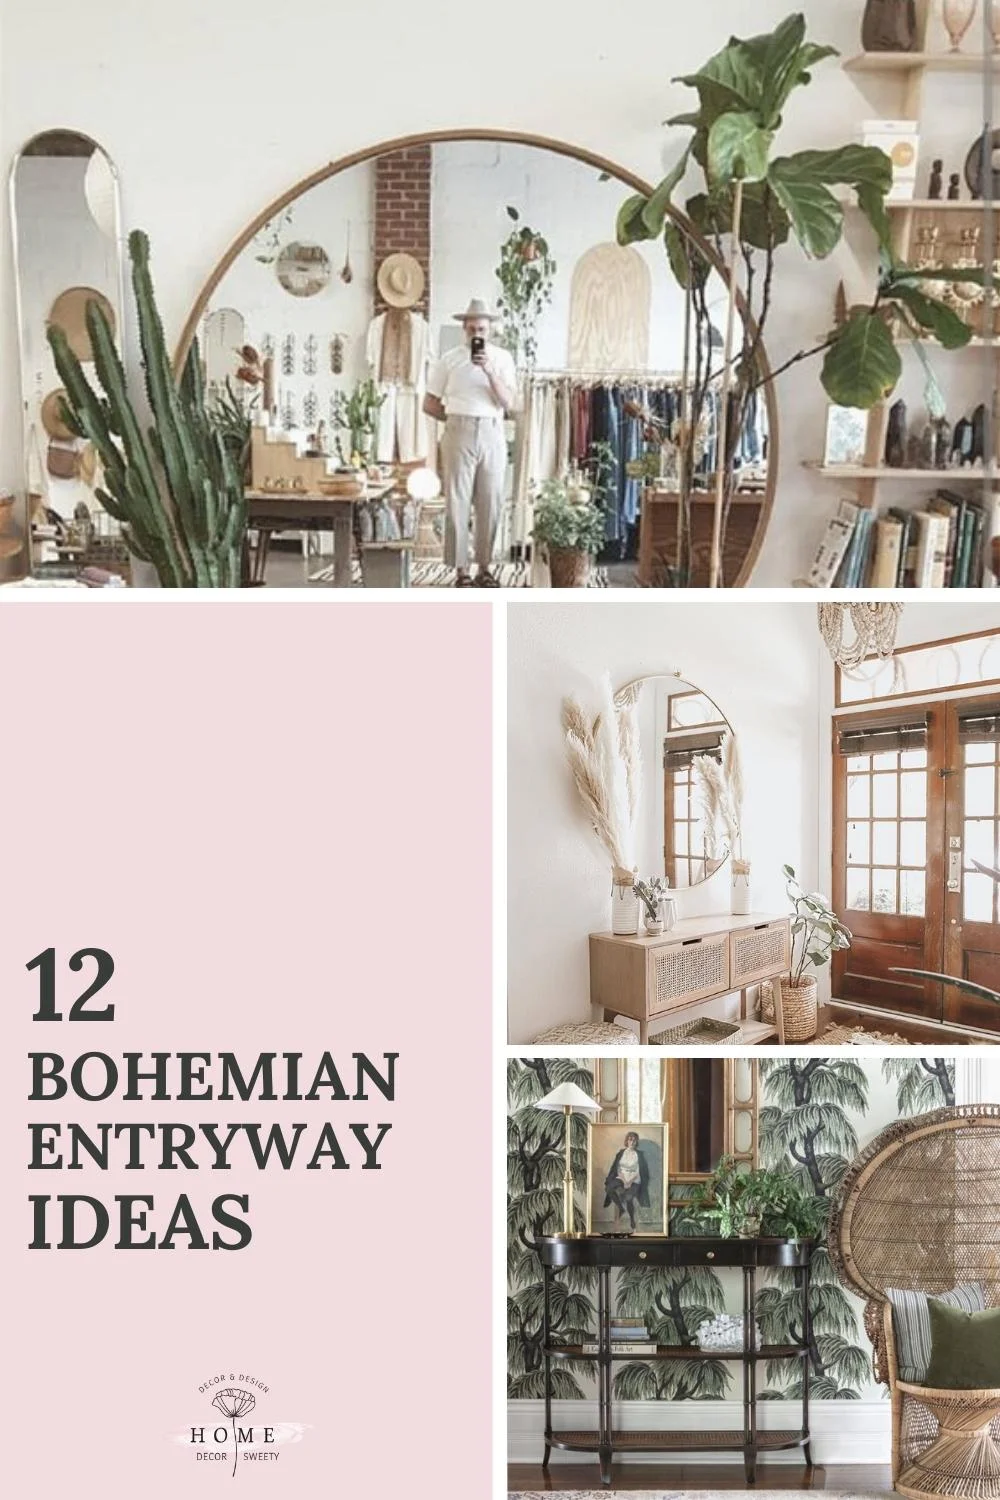 12 Bohemian Entryway IdeaS